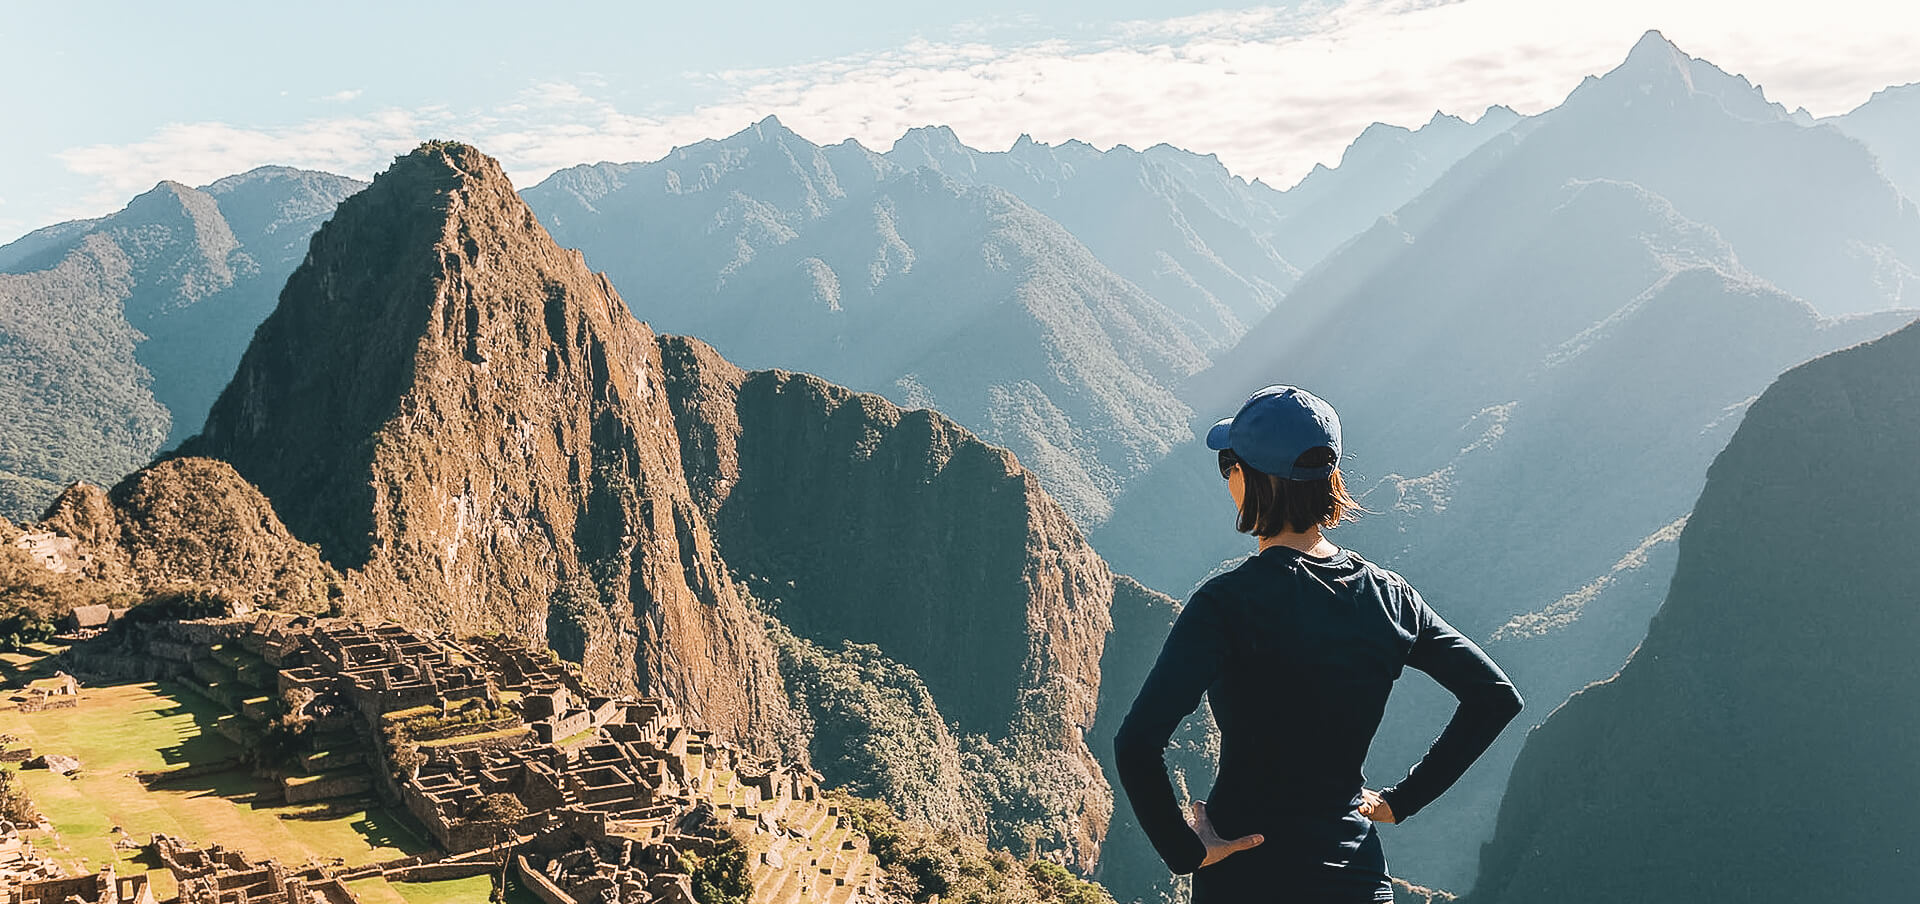 How long does its take to trek to Machu Picchu